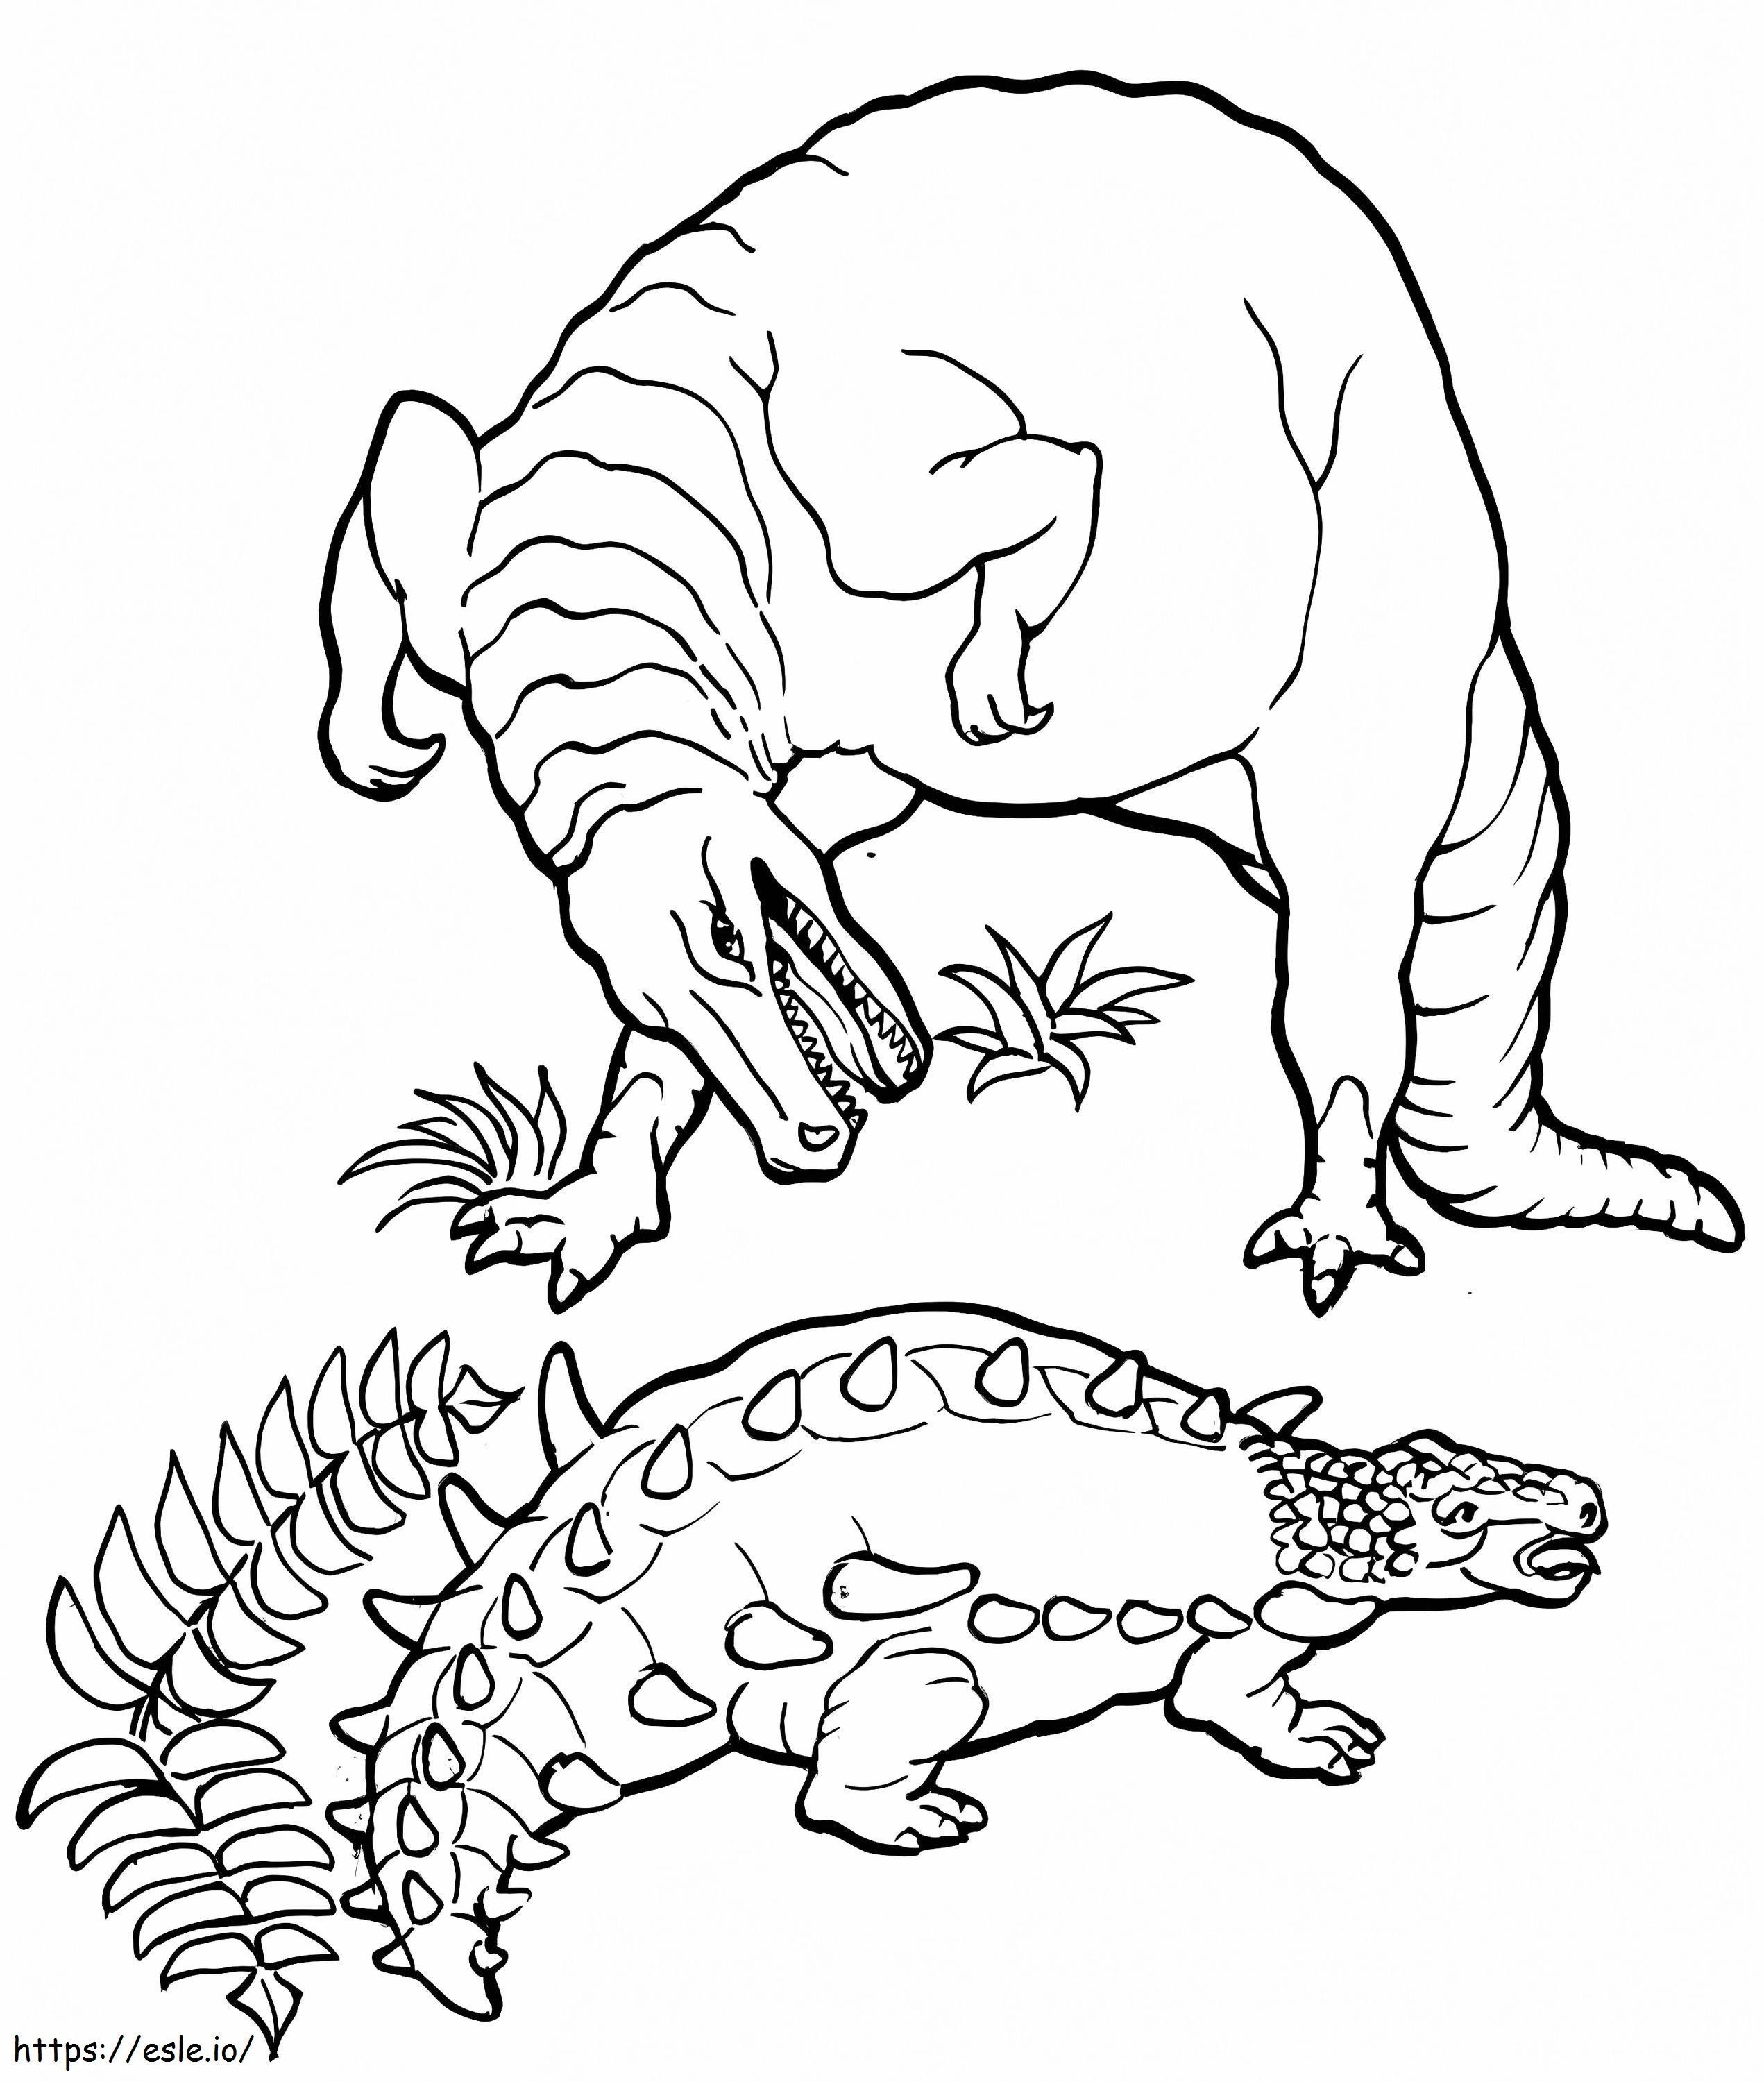 Dinosaur 1 coloring page